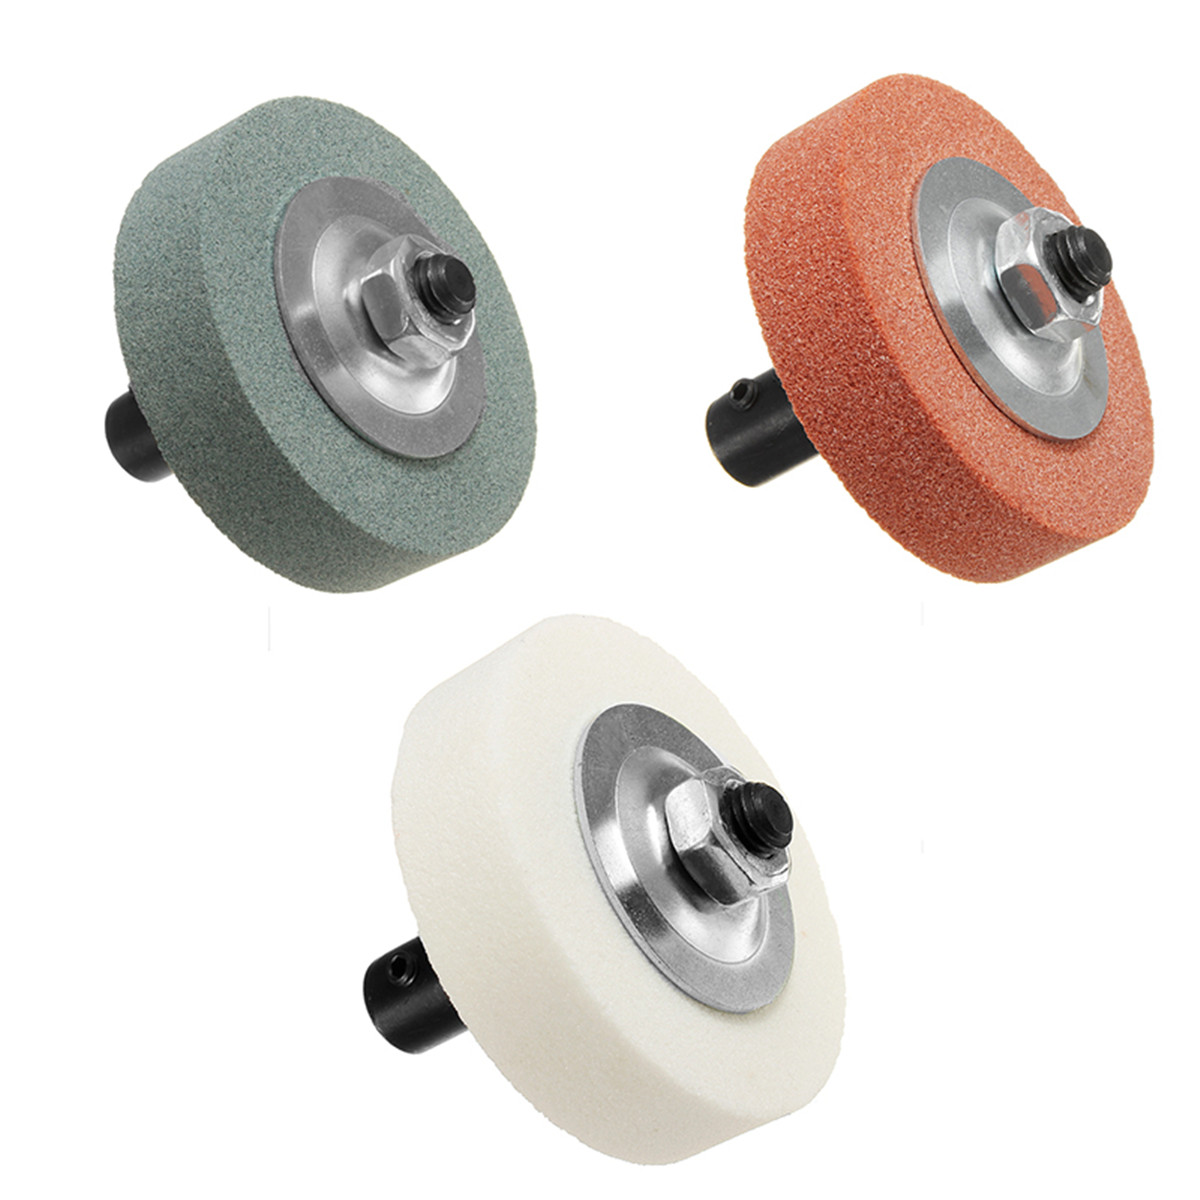 DANIU Grinding Wheel Adapter Set Changed Electric Drill Into Grinding Machine Orange / Green / White 70x20x10mm